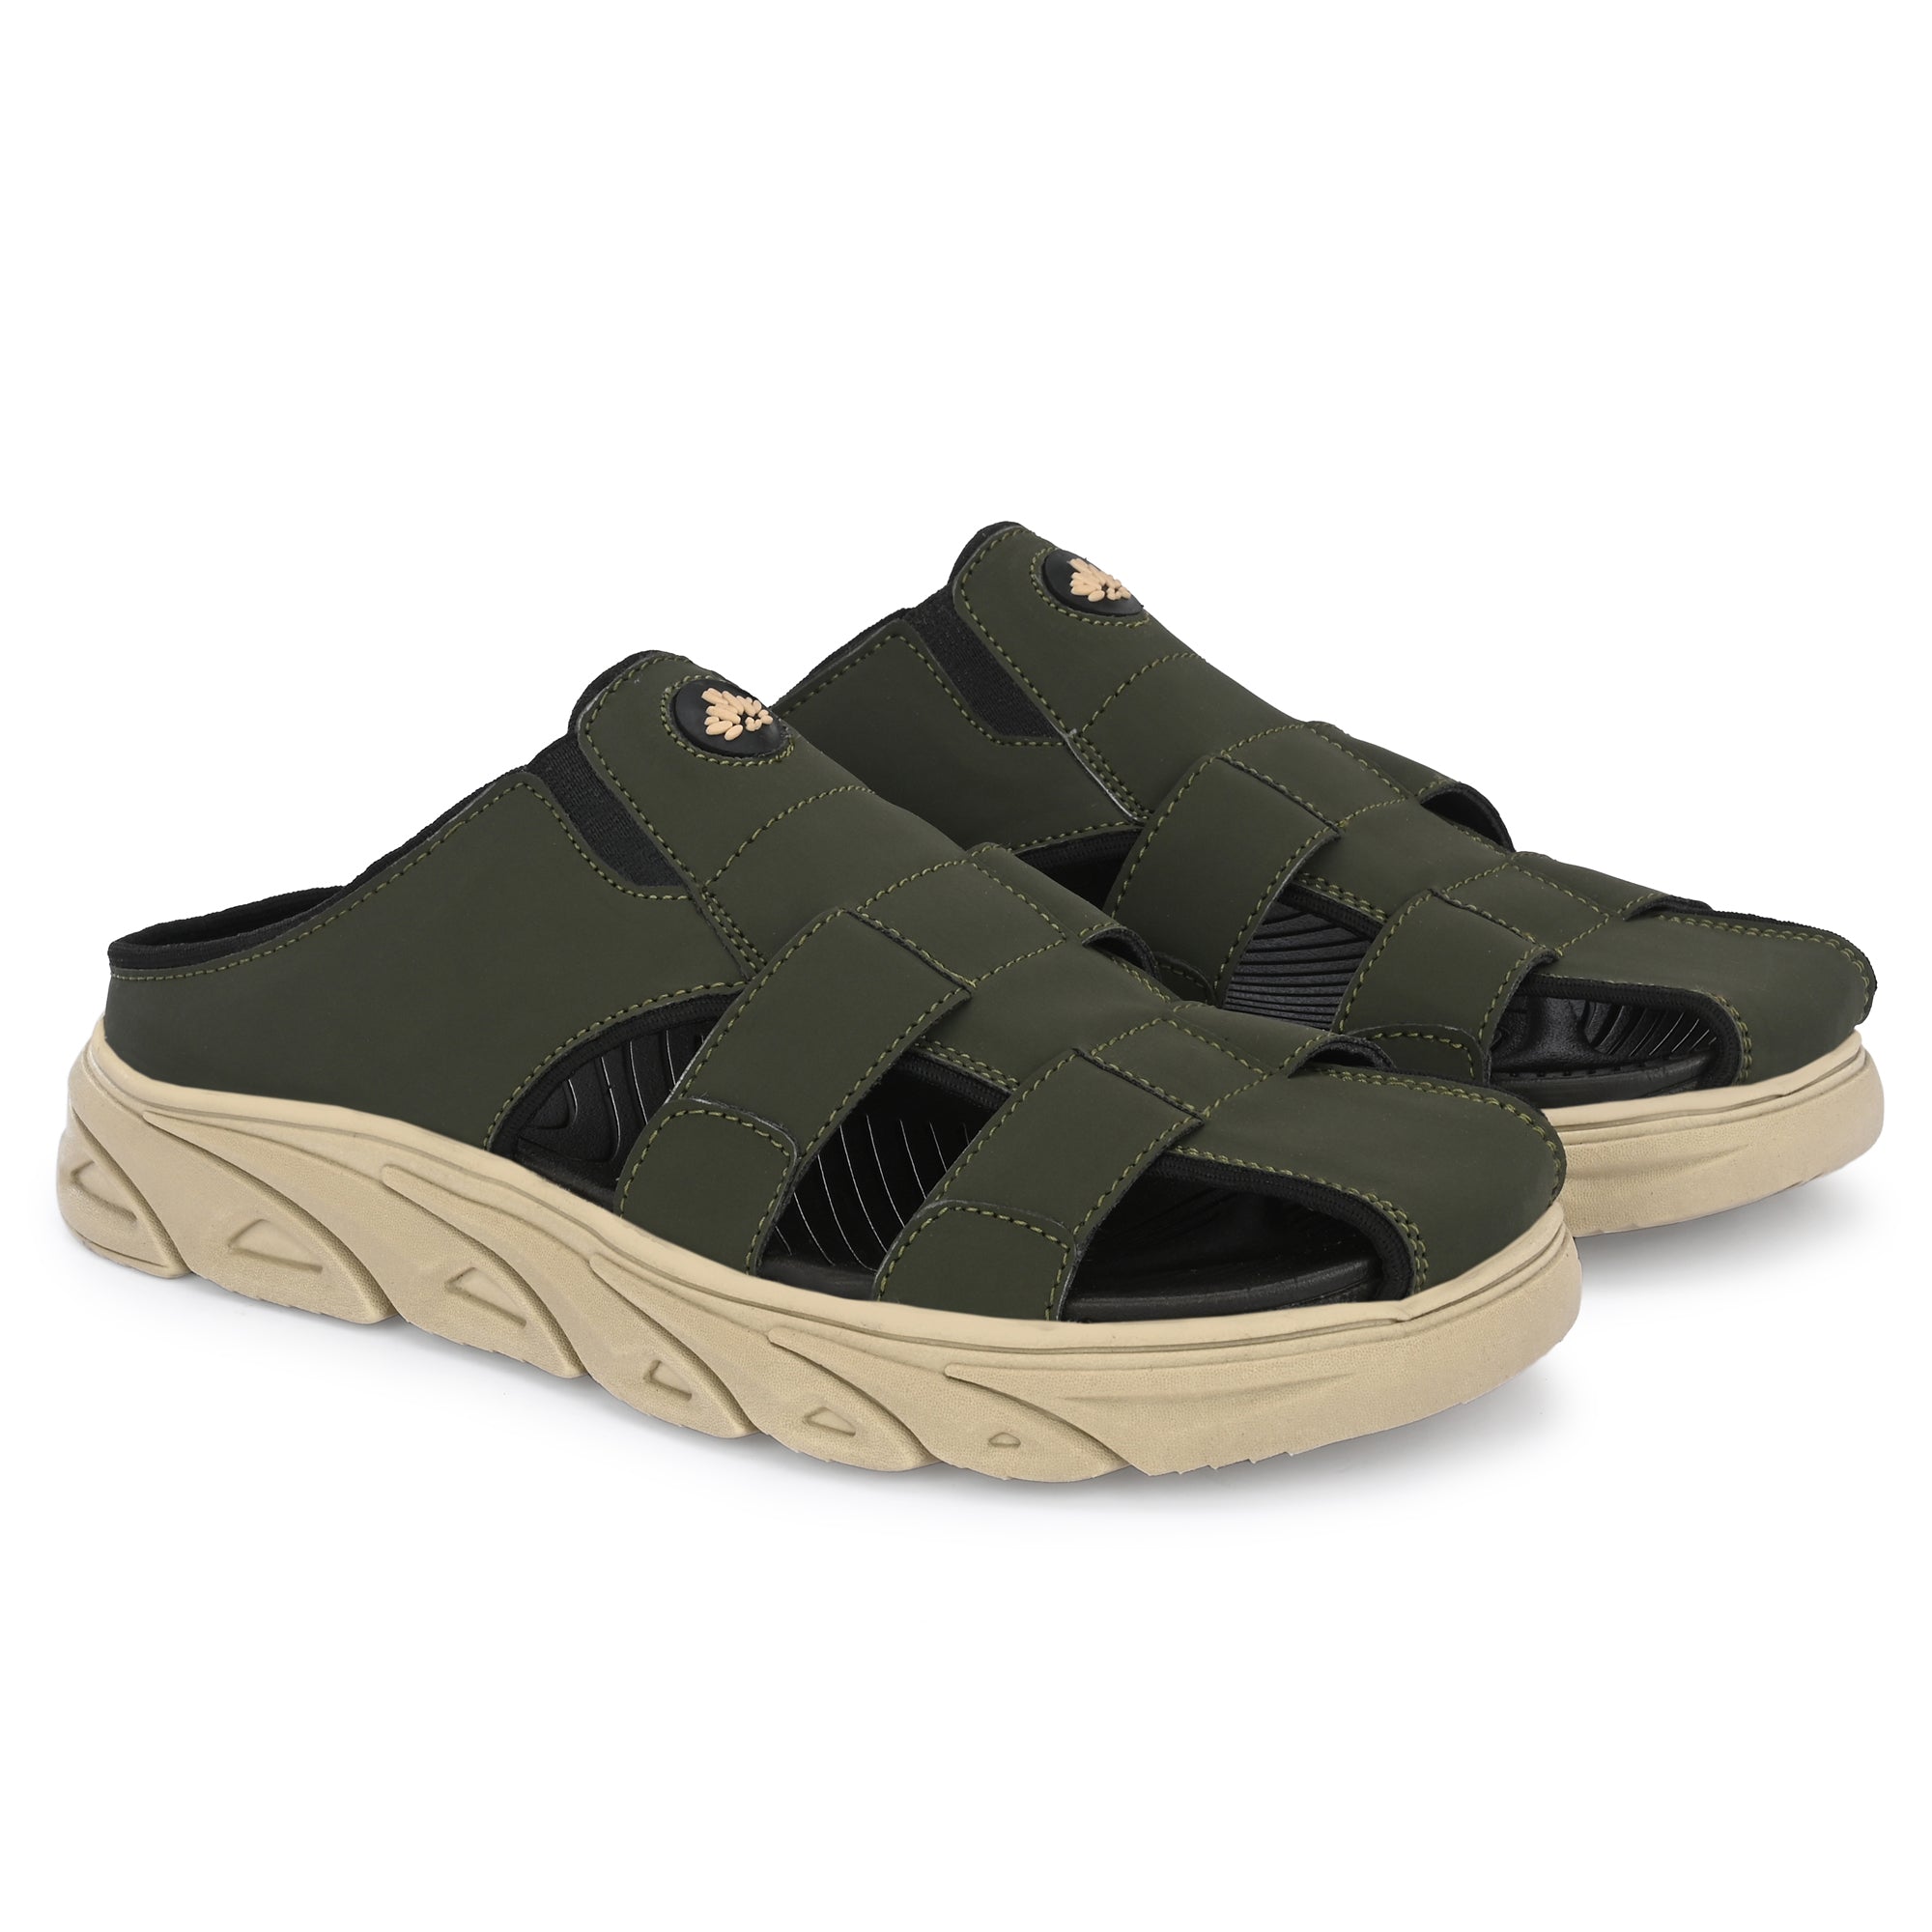 Men's Sandals: Casual Beach Sandals for Summer | REEF®